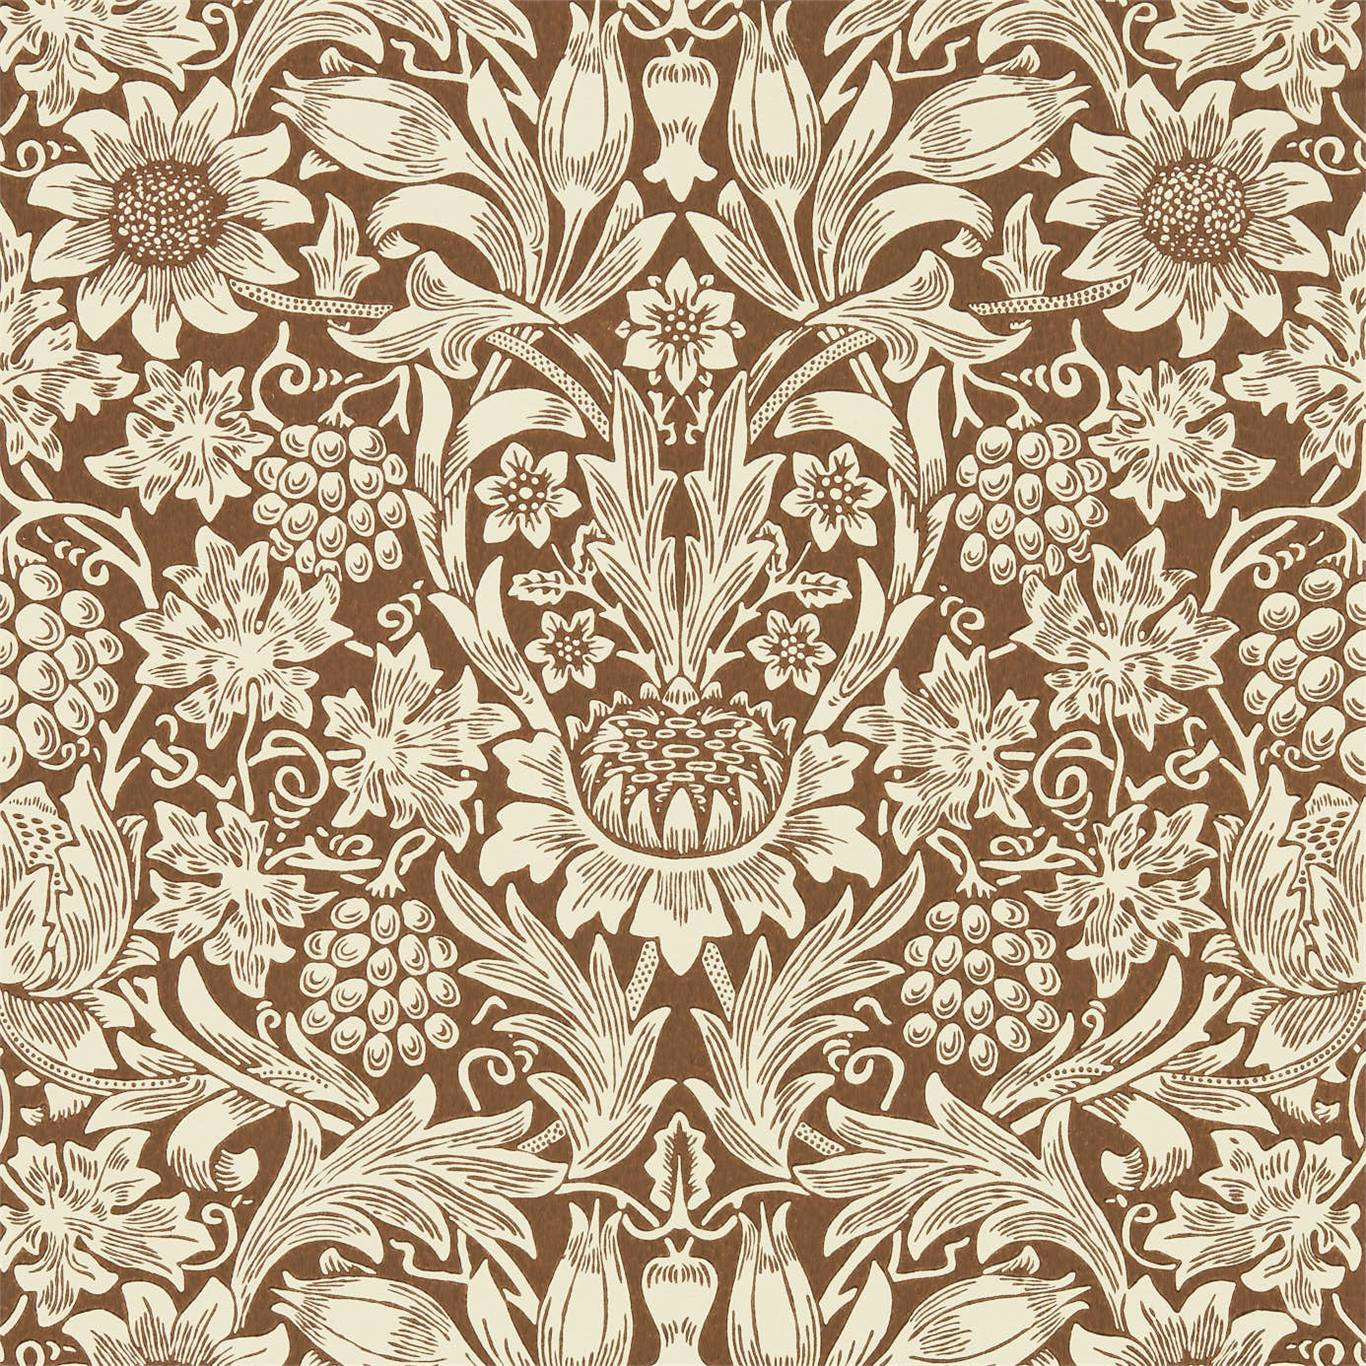 Sunflower Chocolate/Cream Wallpaper DBPW216961 by Morris & Co